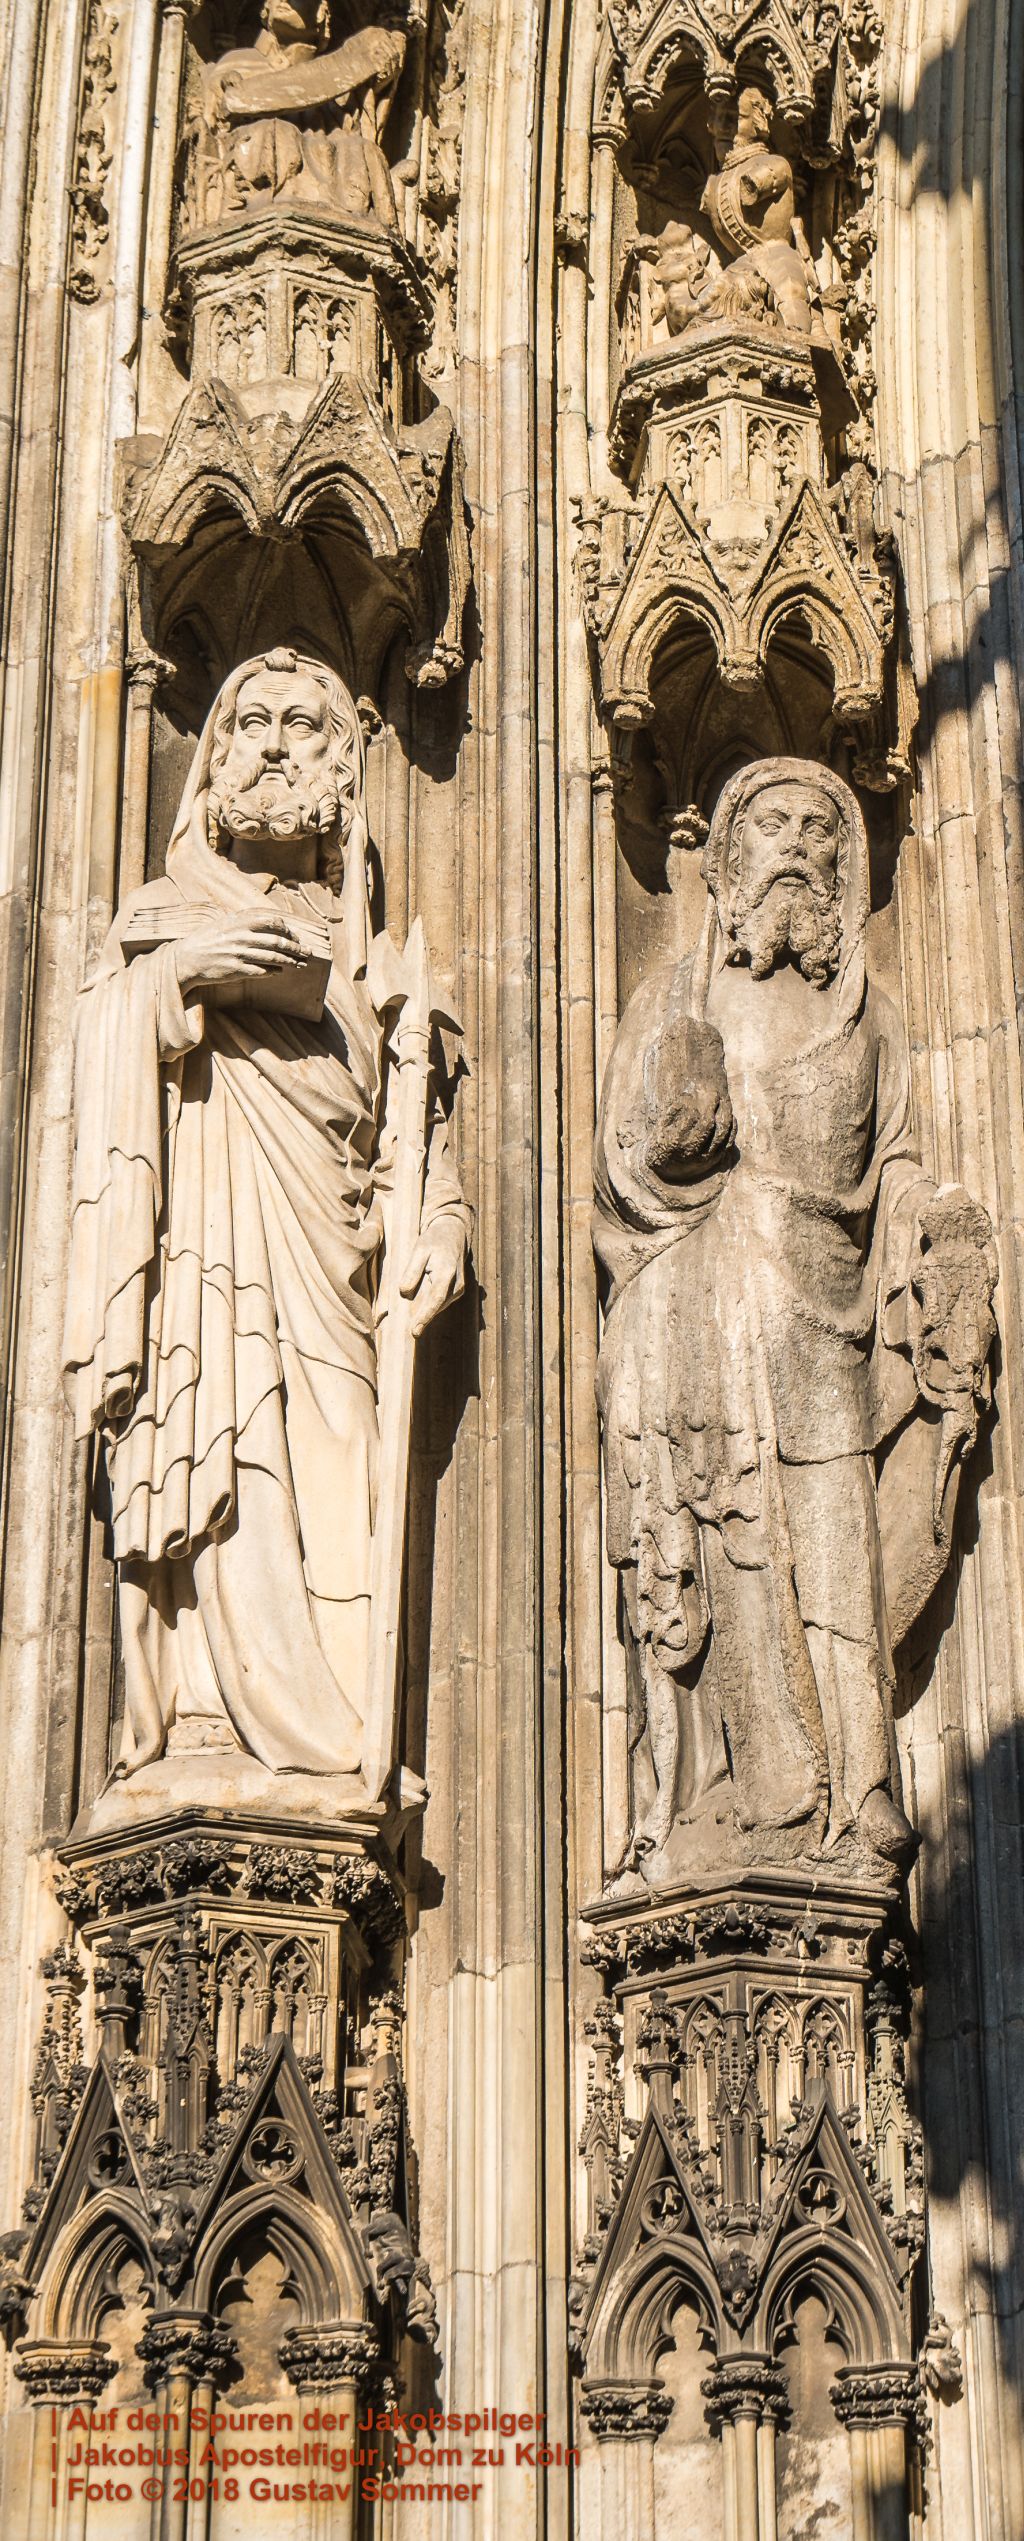 Bild 37 Jakobus, Apostelfigur im Portal des Kölner Doms